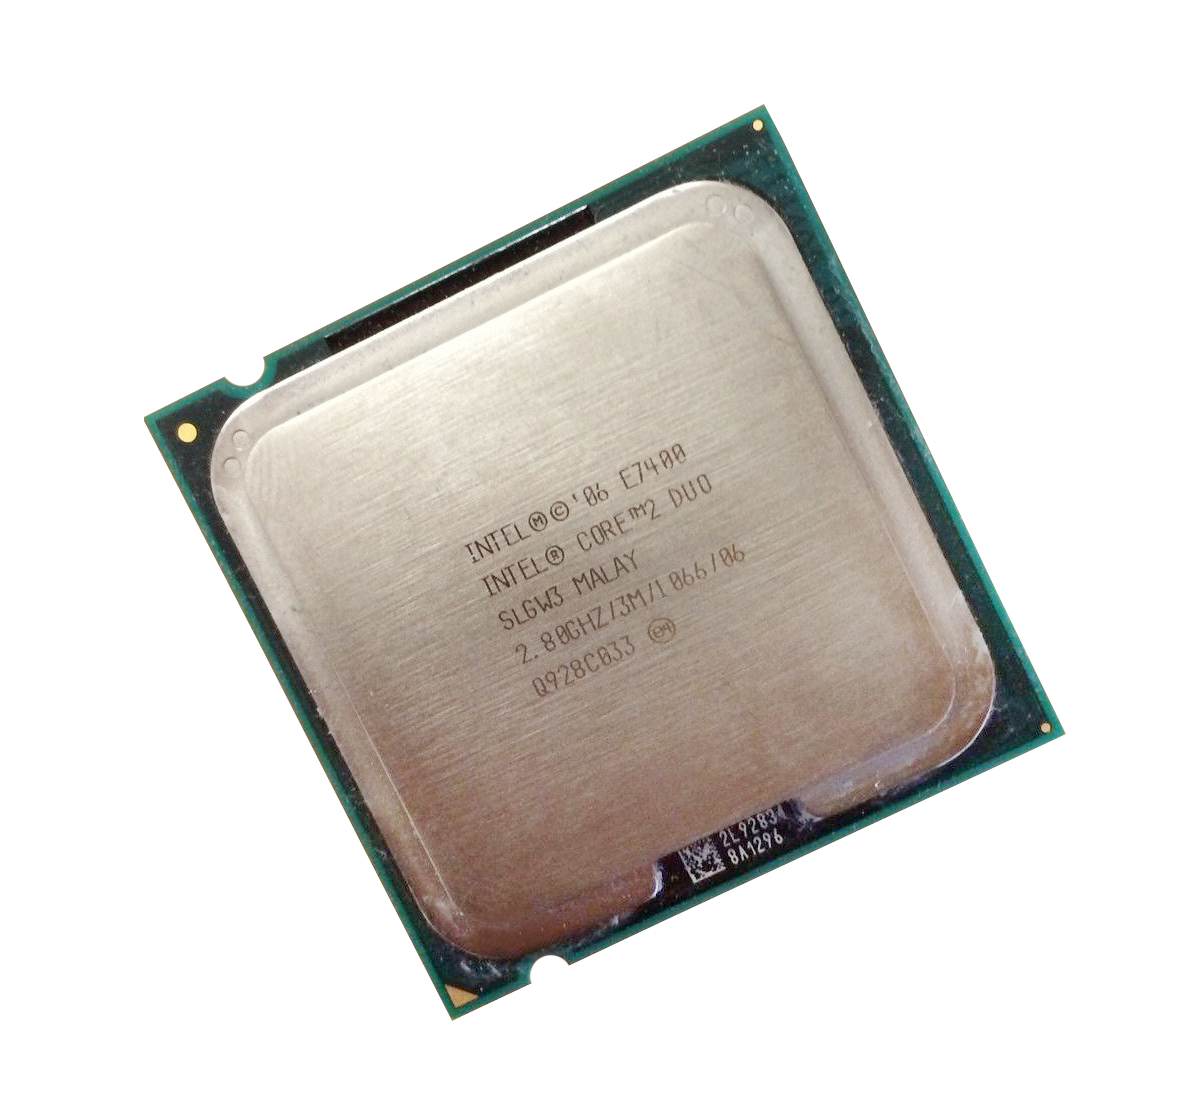 E7400-R Intel Core 2 Duo E7400 2.80GHz 1066MHz FSB 3MB L2 Cache Socket LGA775 Desktop Processor